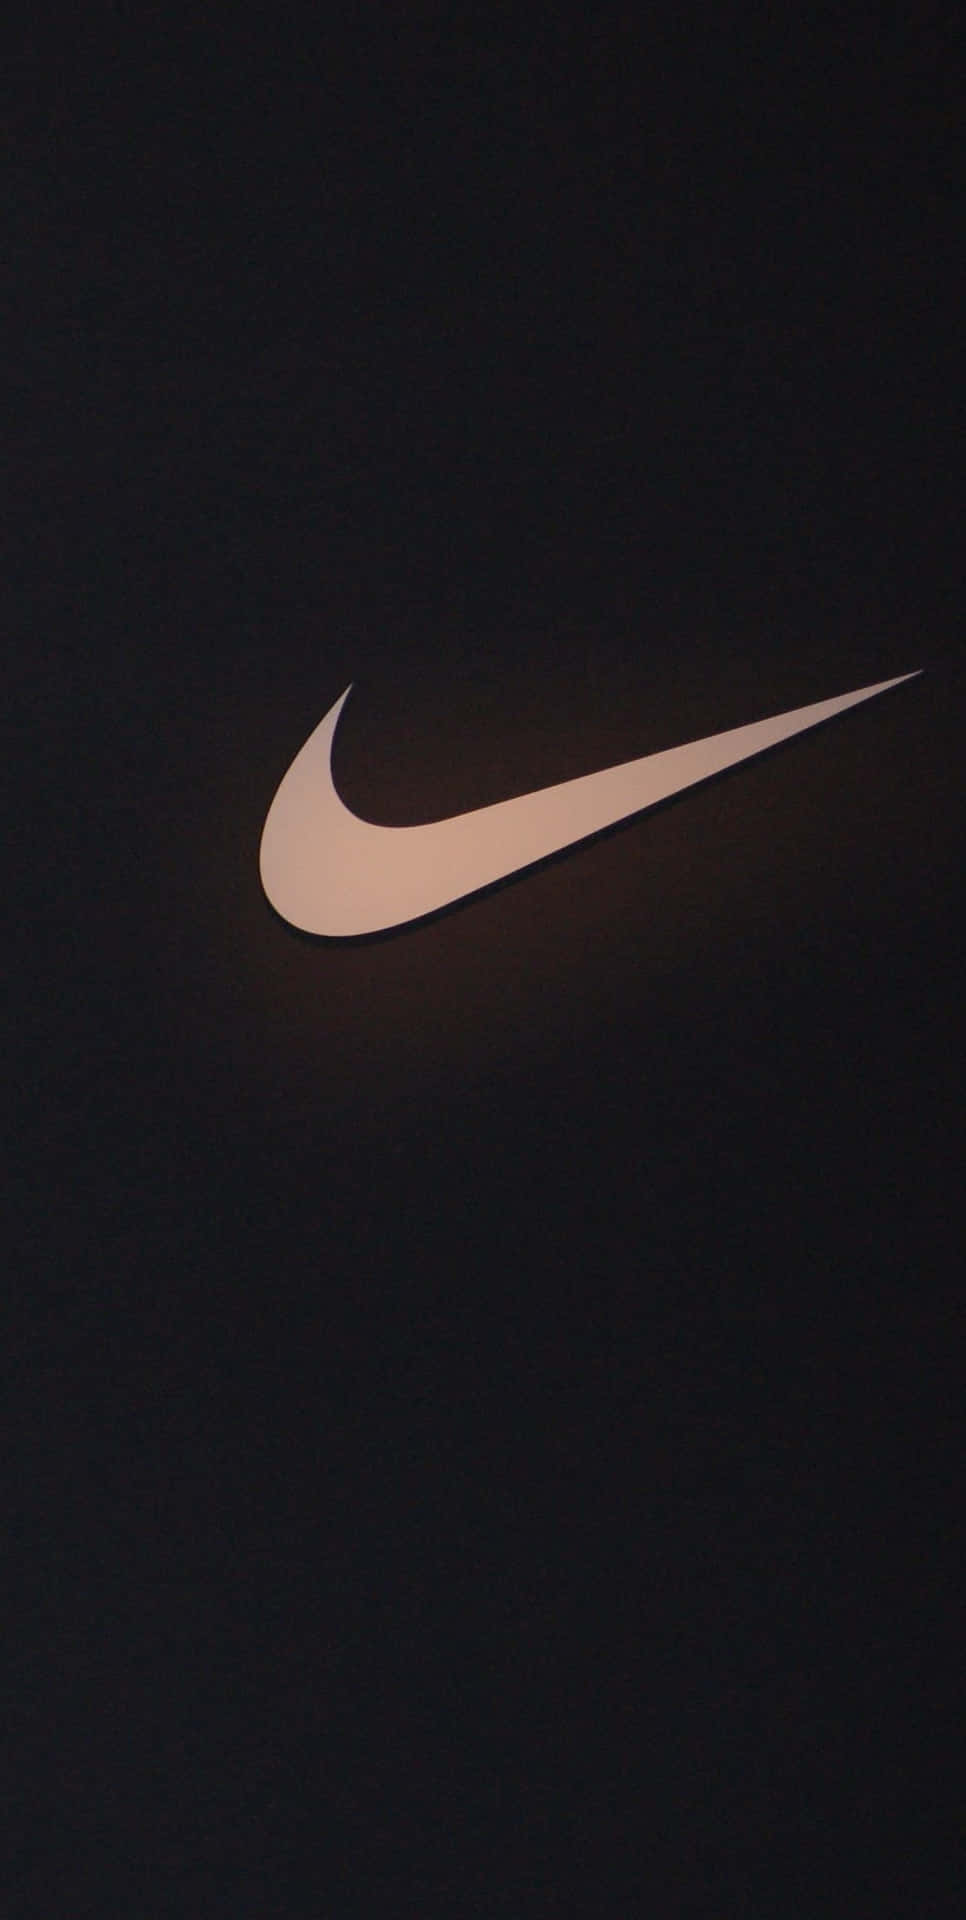 The iconic Nike logo Wallpaper